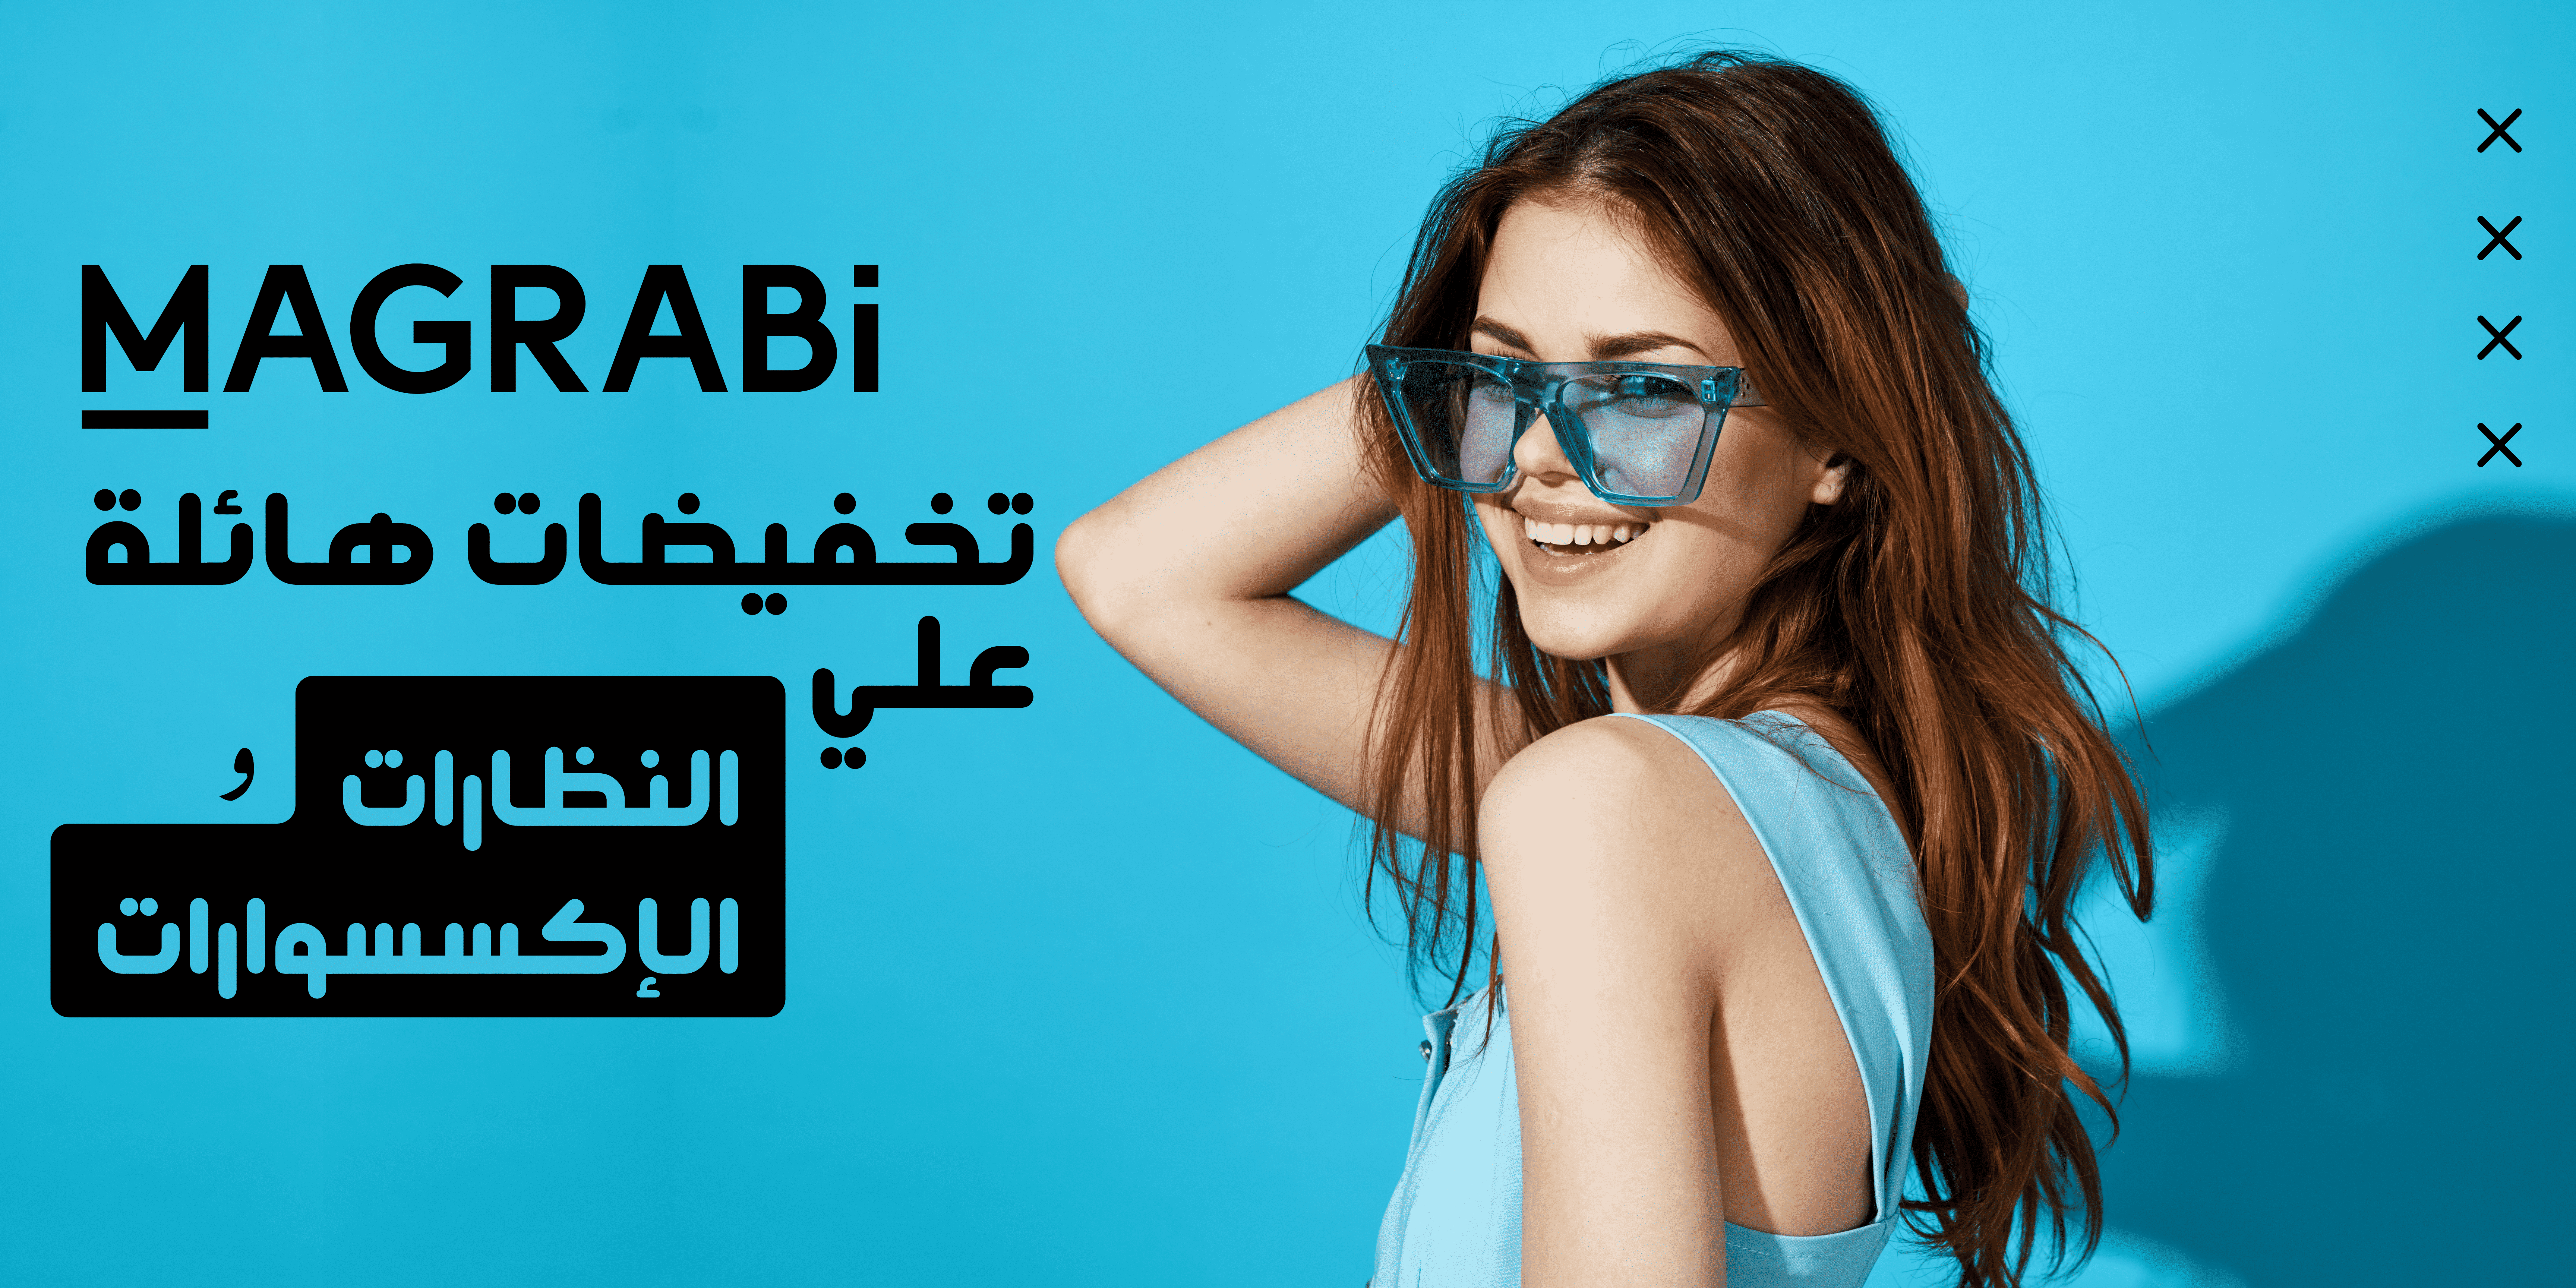 مغربي 5 كود خصم مغربي للنظارات بقيمة 40% | Magrabi Promo Code